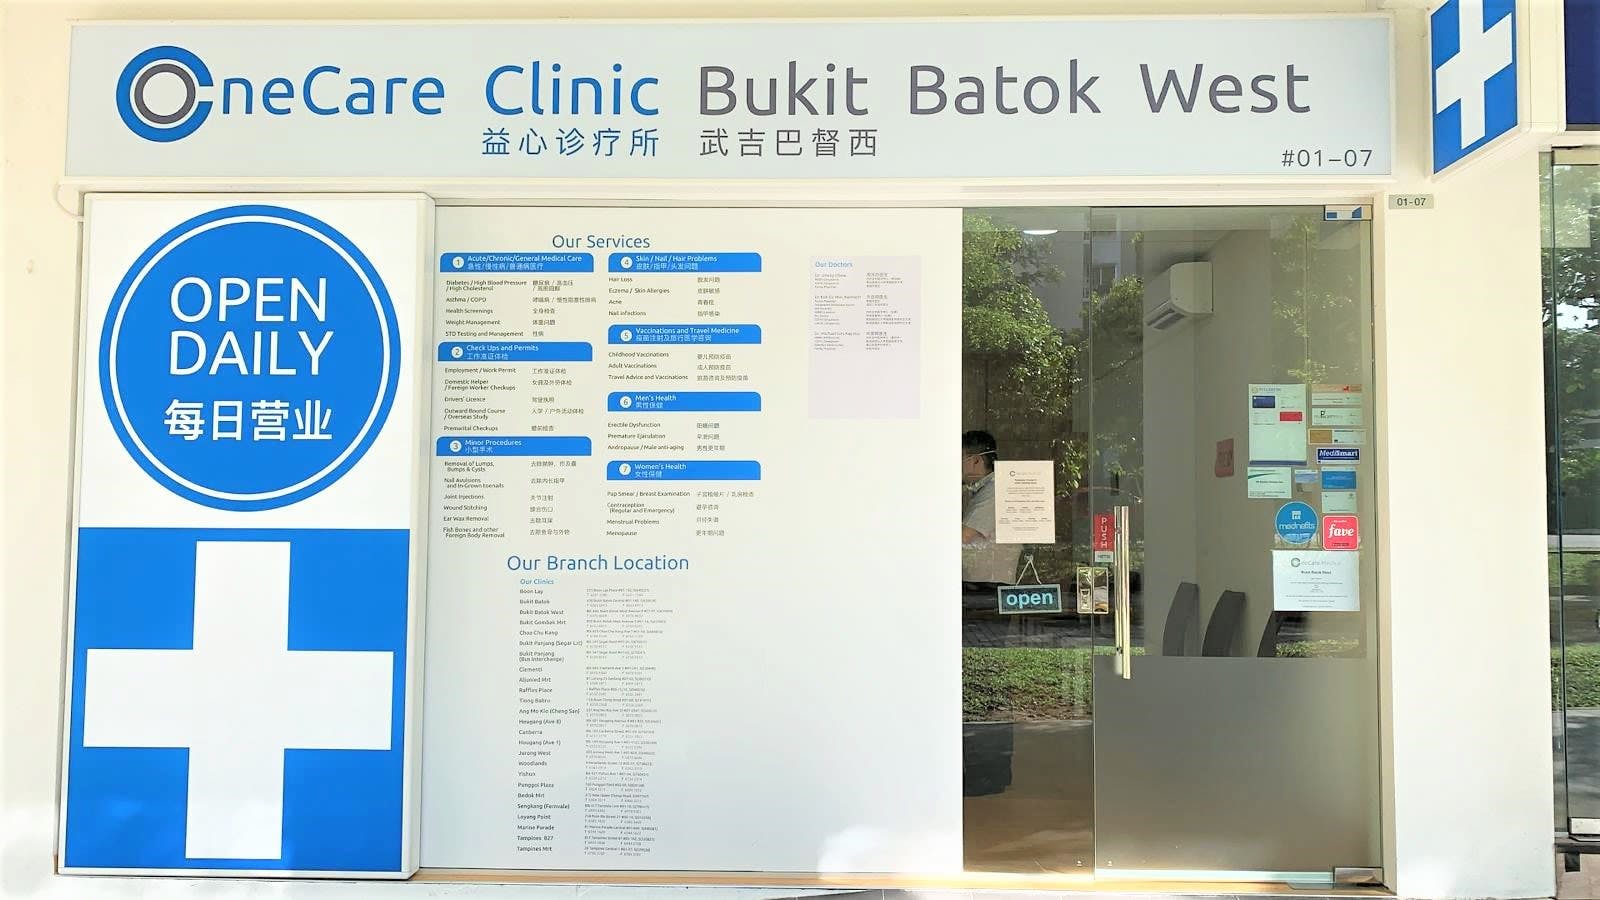 OneCare Medical Clinic Bukit Batok West